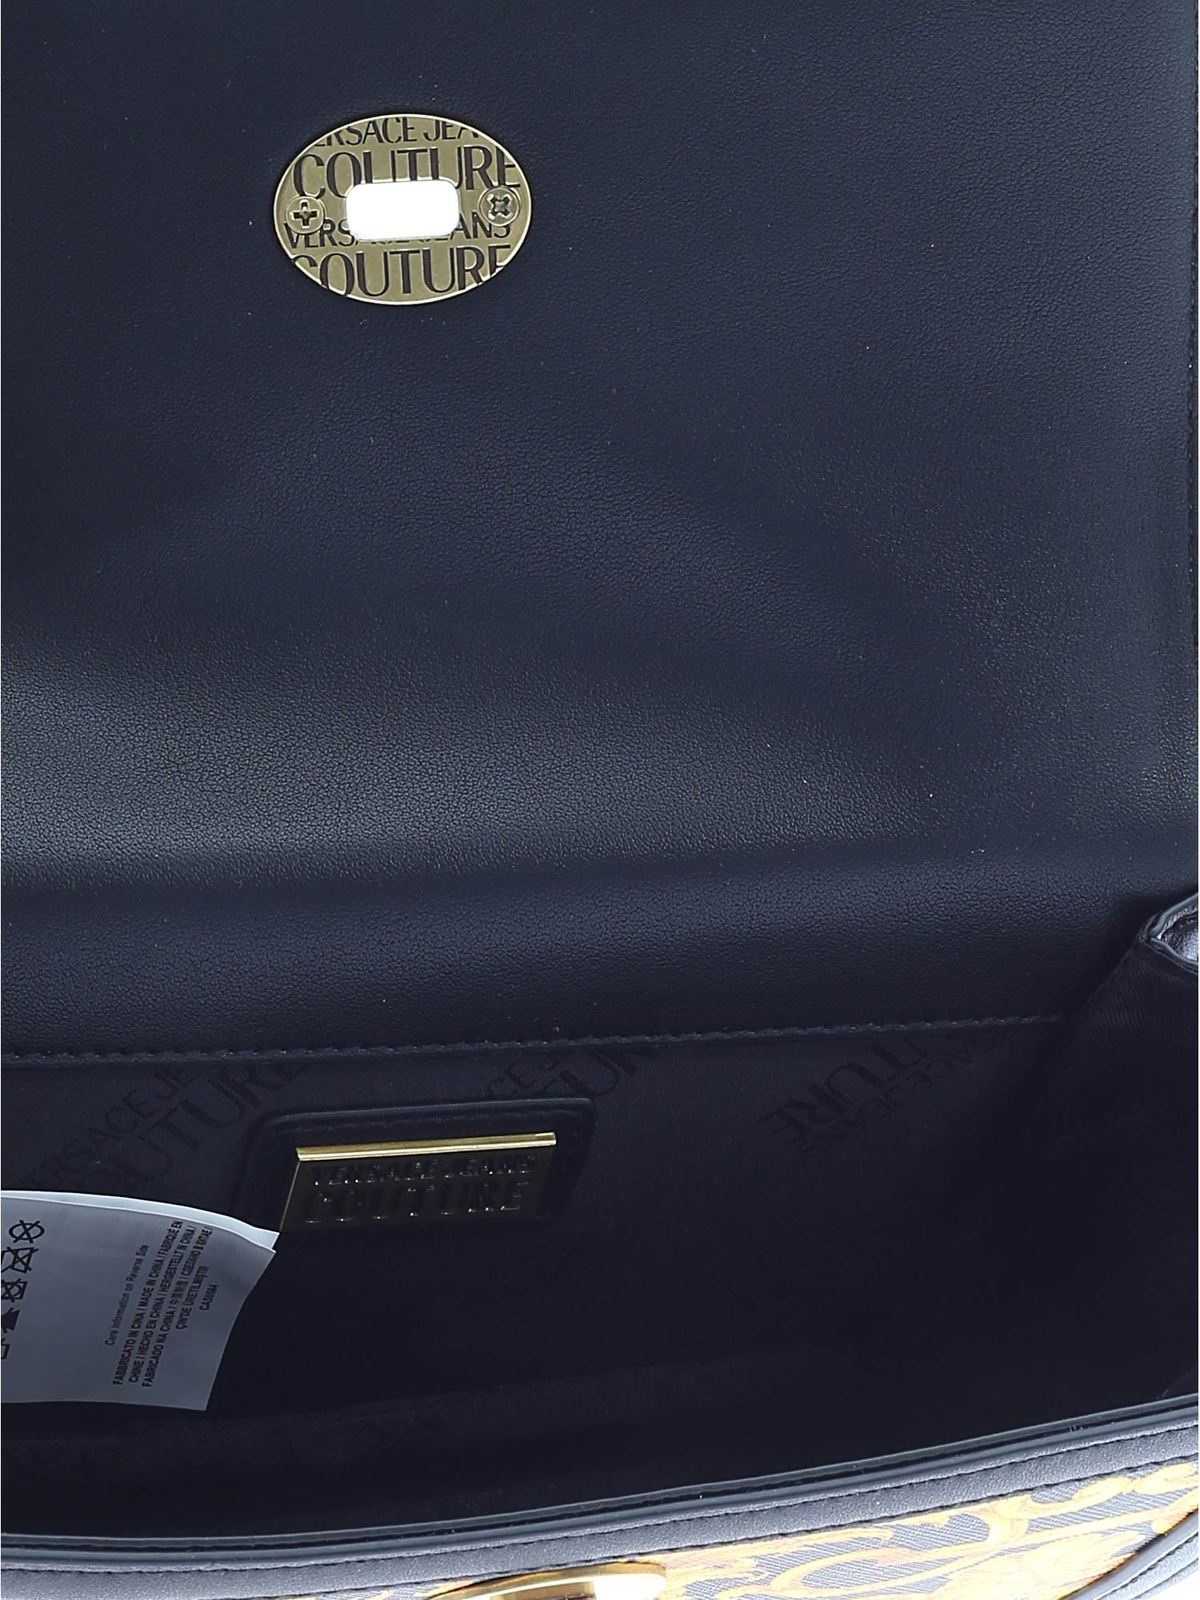 Versace Jeans Couture Logo Lock Baroque Print Cross-body Bag - Black/Gold